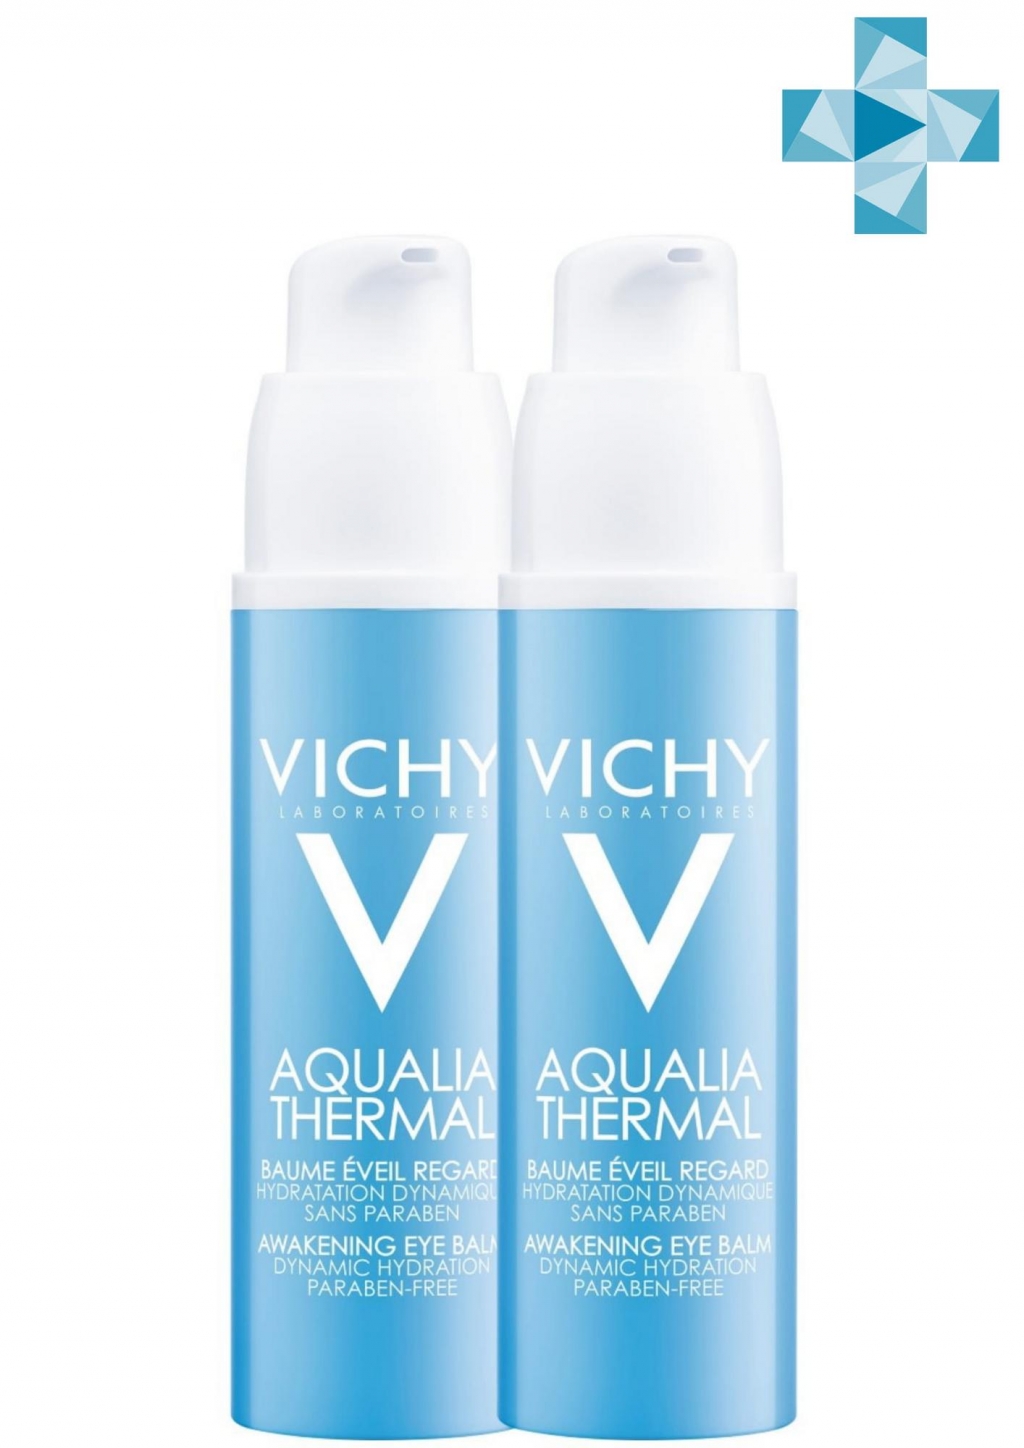 Vichy Комплект Аквалия Термаль Пробуждающий бальзам для контура глаз, 2х15 мл (Vichy, Aqualia Thermal)